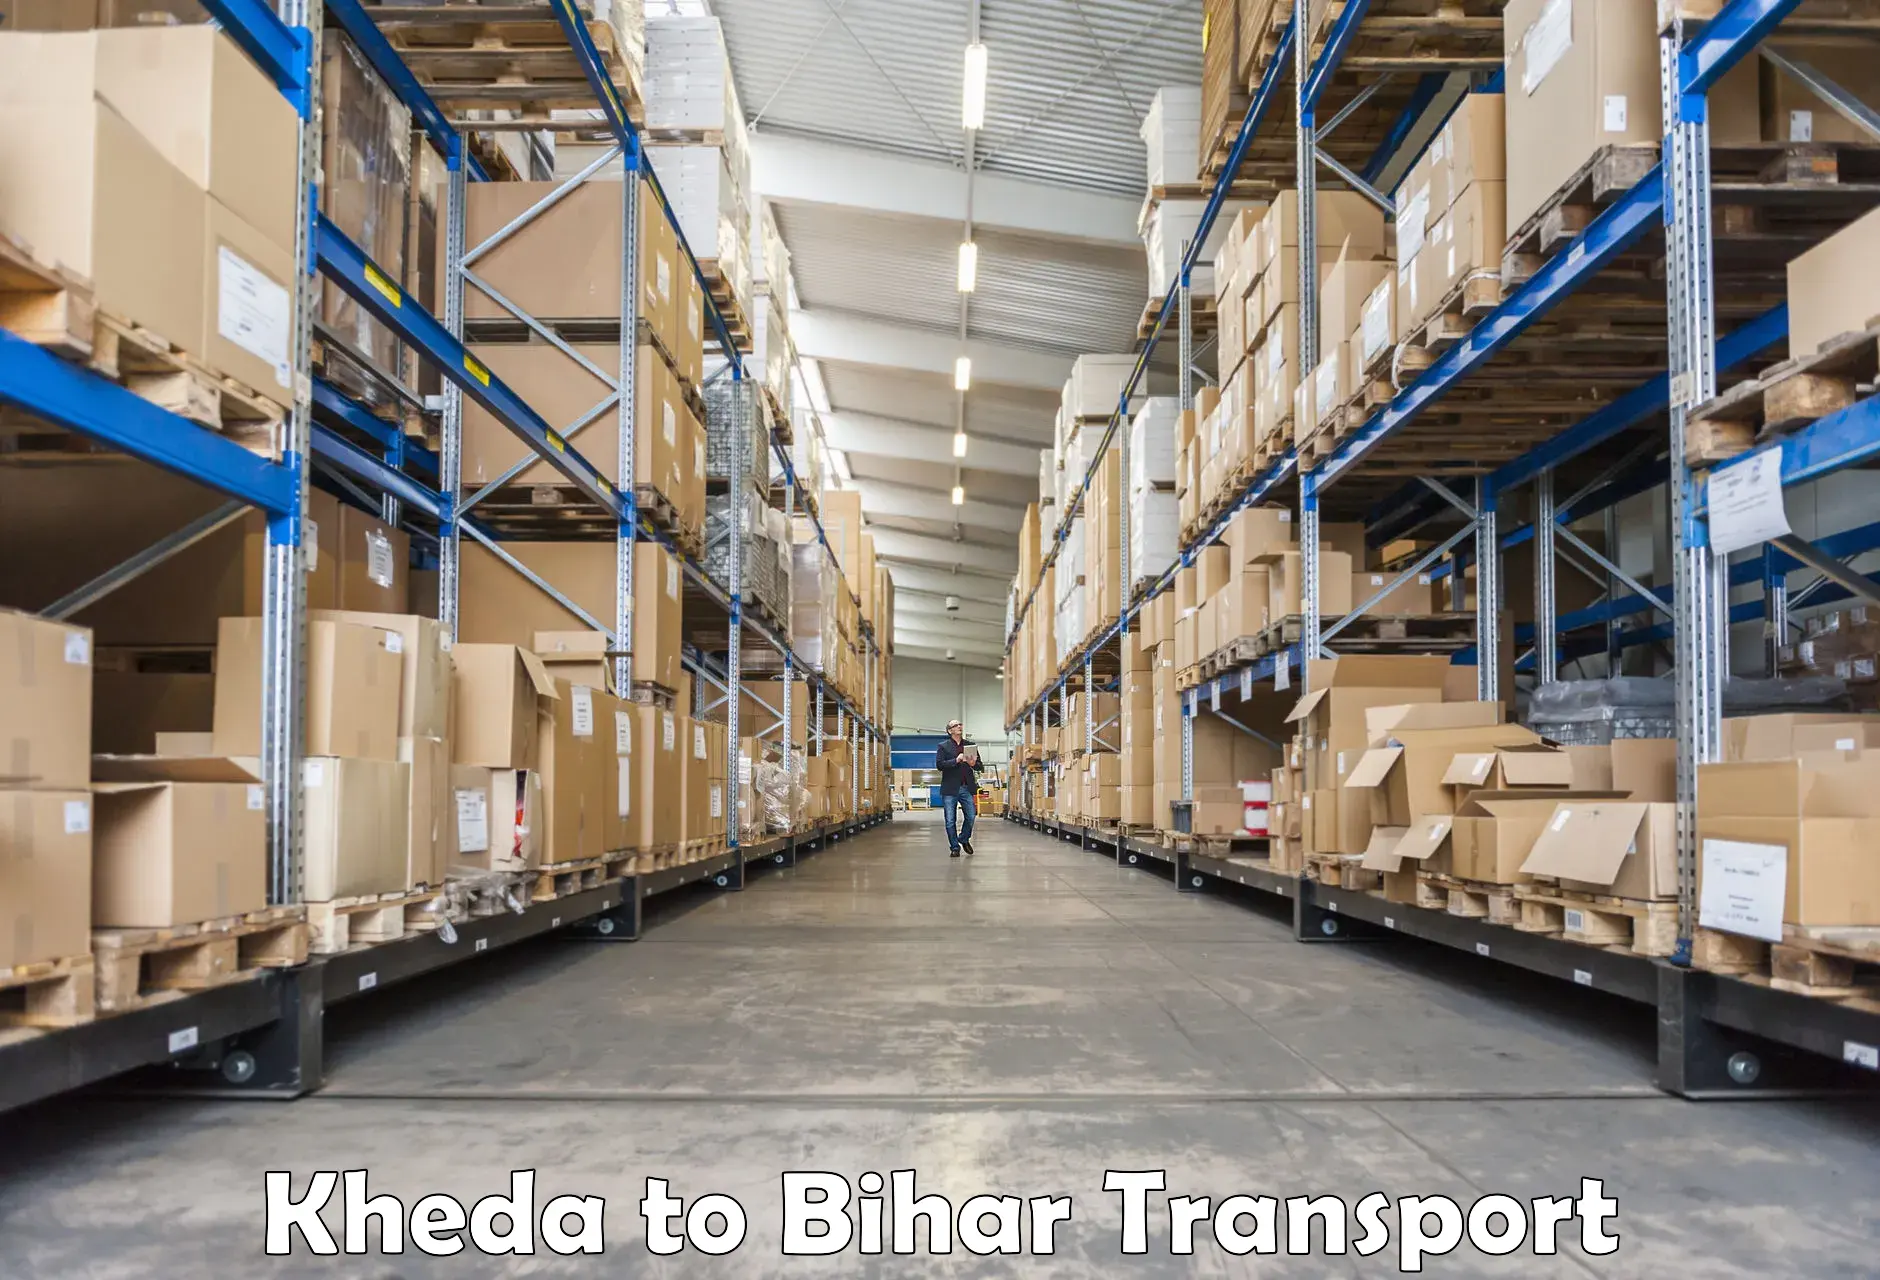 Shipping partner Kheda to Minapur